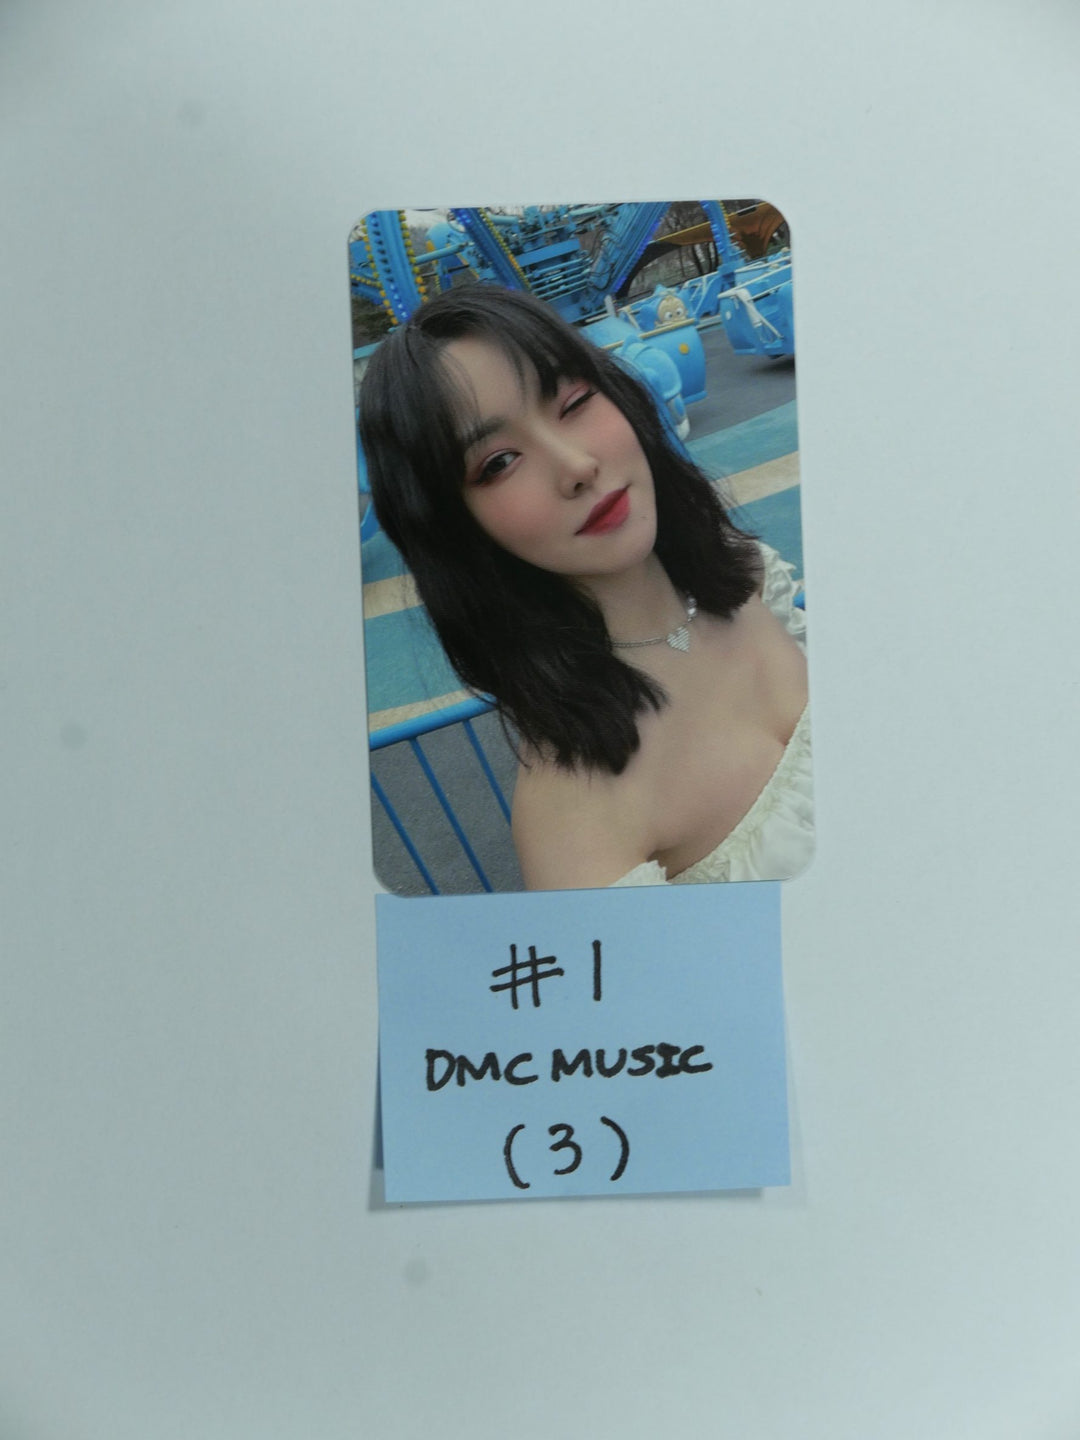 YUJU (Of 여자친구) "[REC.]" - DMC 팬사인회 이벤트 포토카드